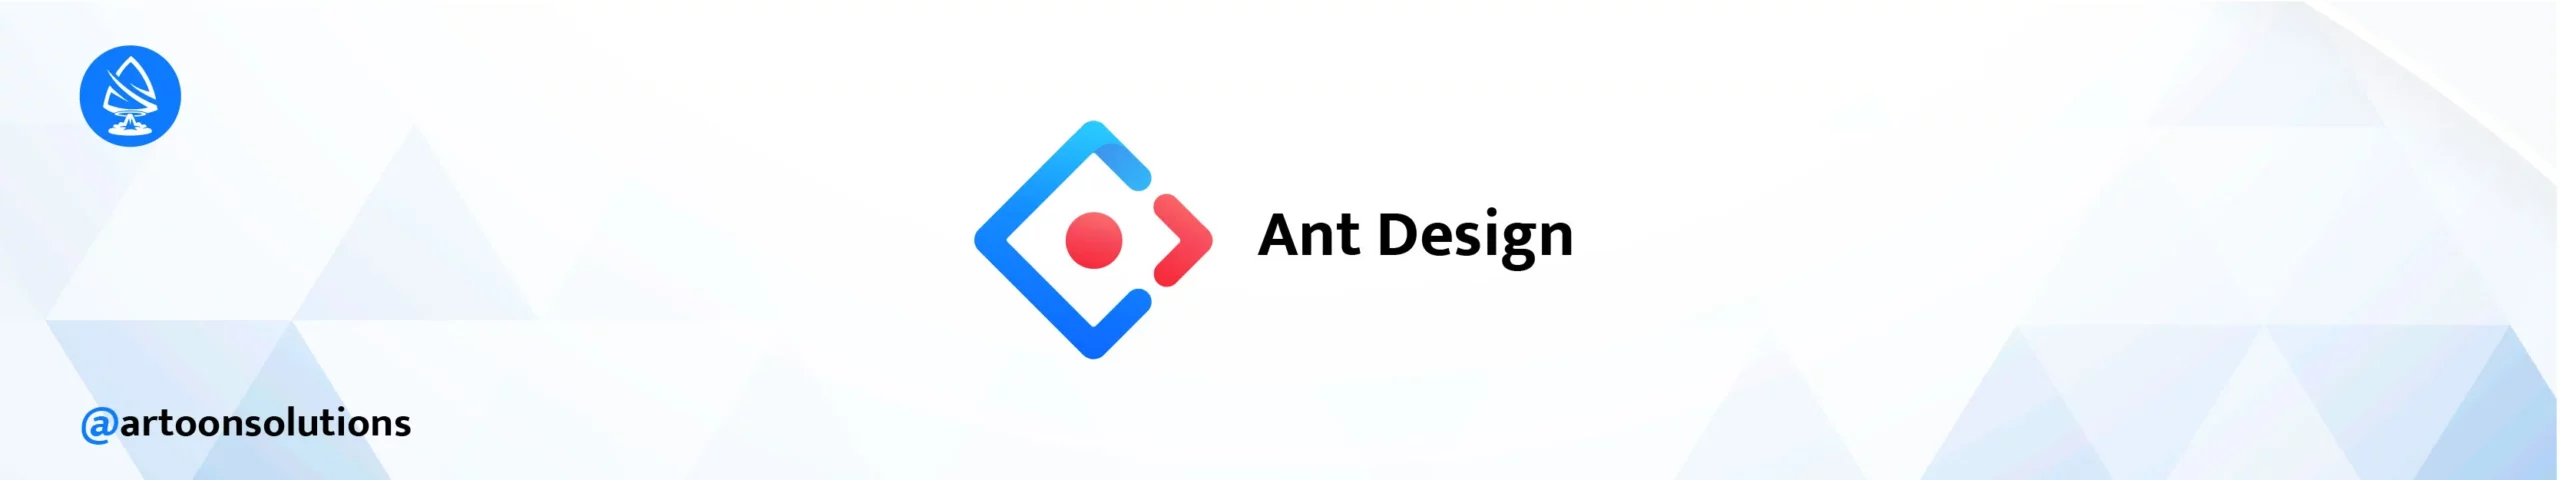 Ant Design Mobile RN